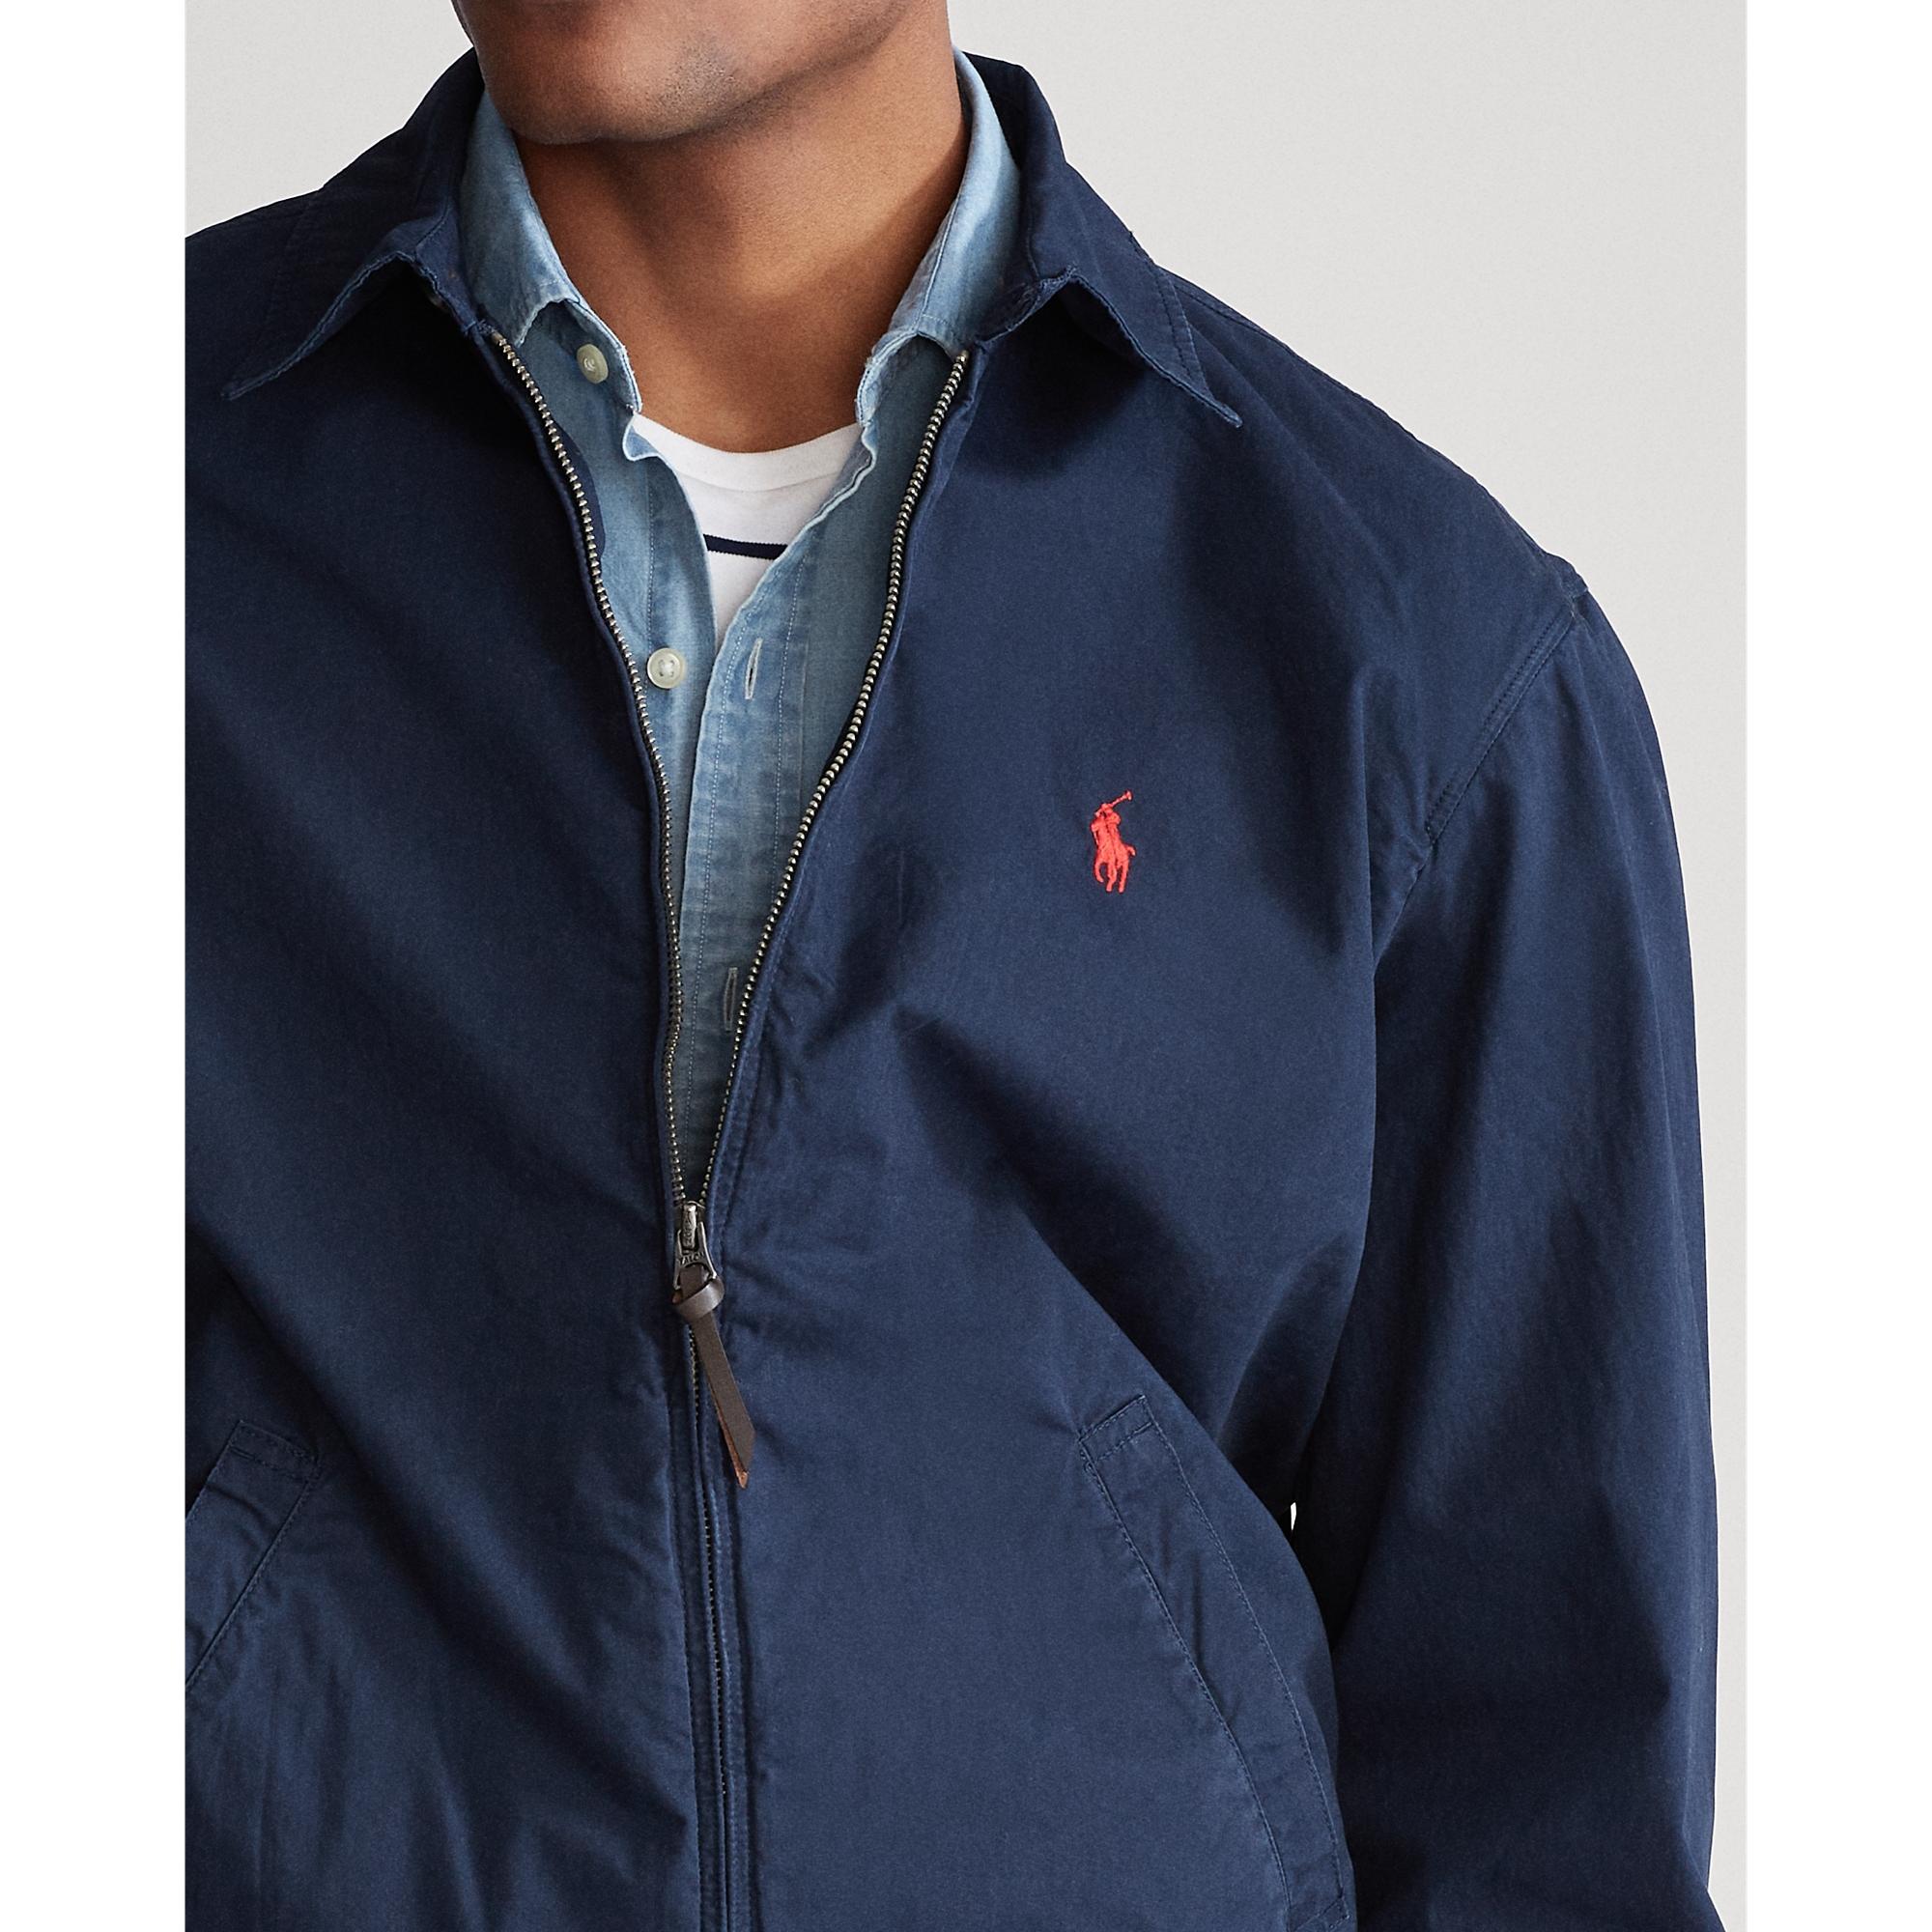 Ralph Lauren Bayport Cotton Jacket in Blue for Men - Lyst